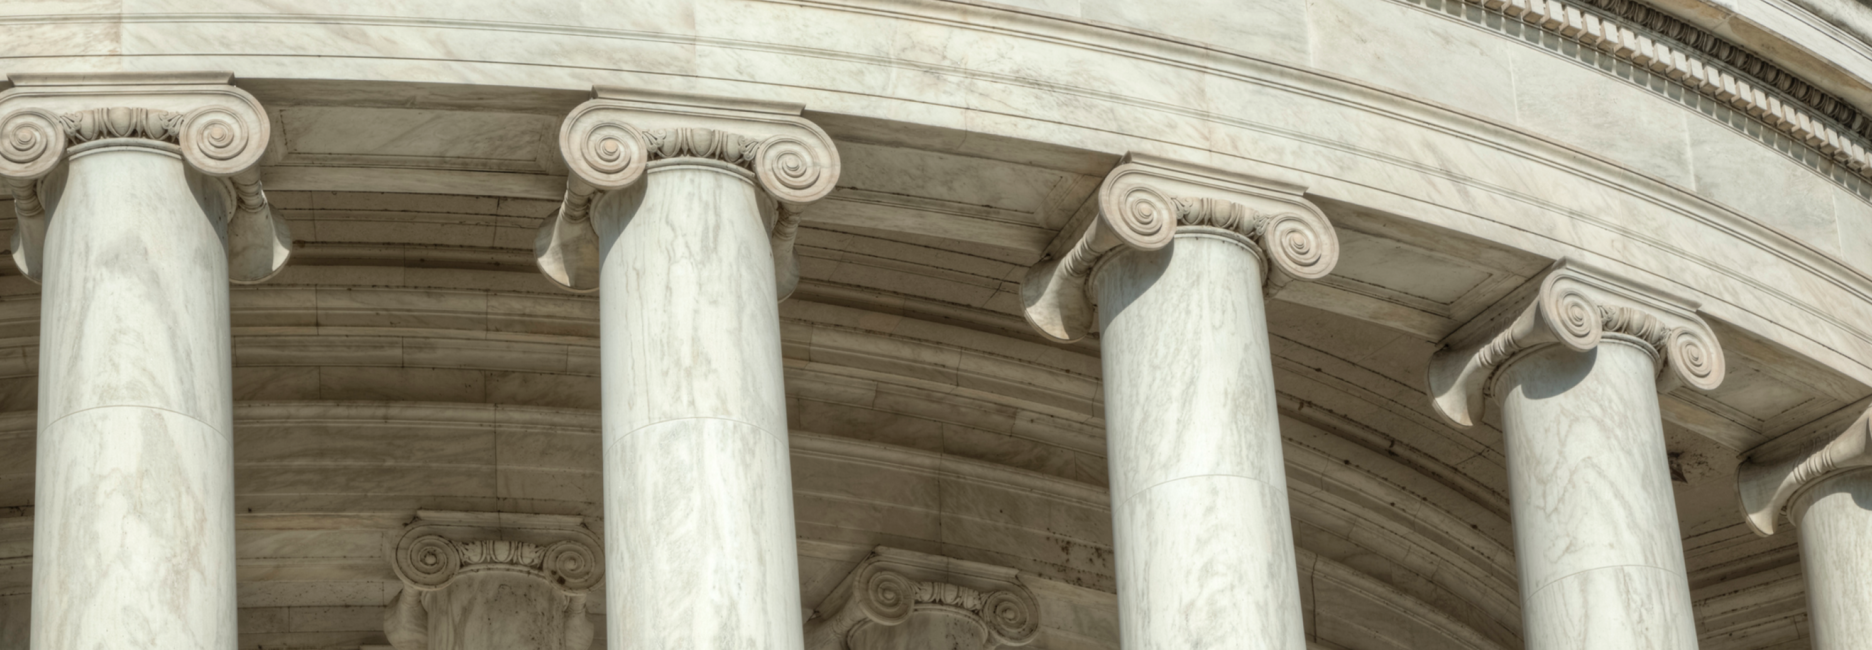 stone columns at Jefferson Memorial